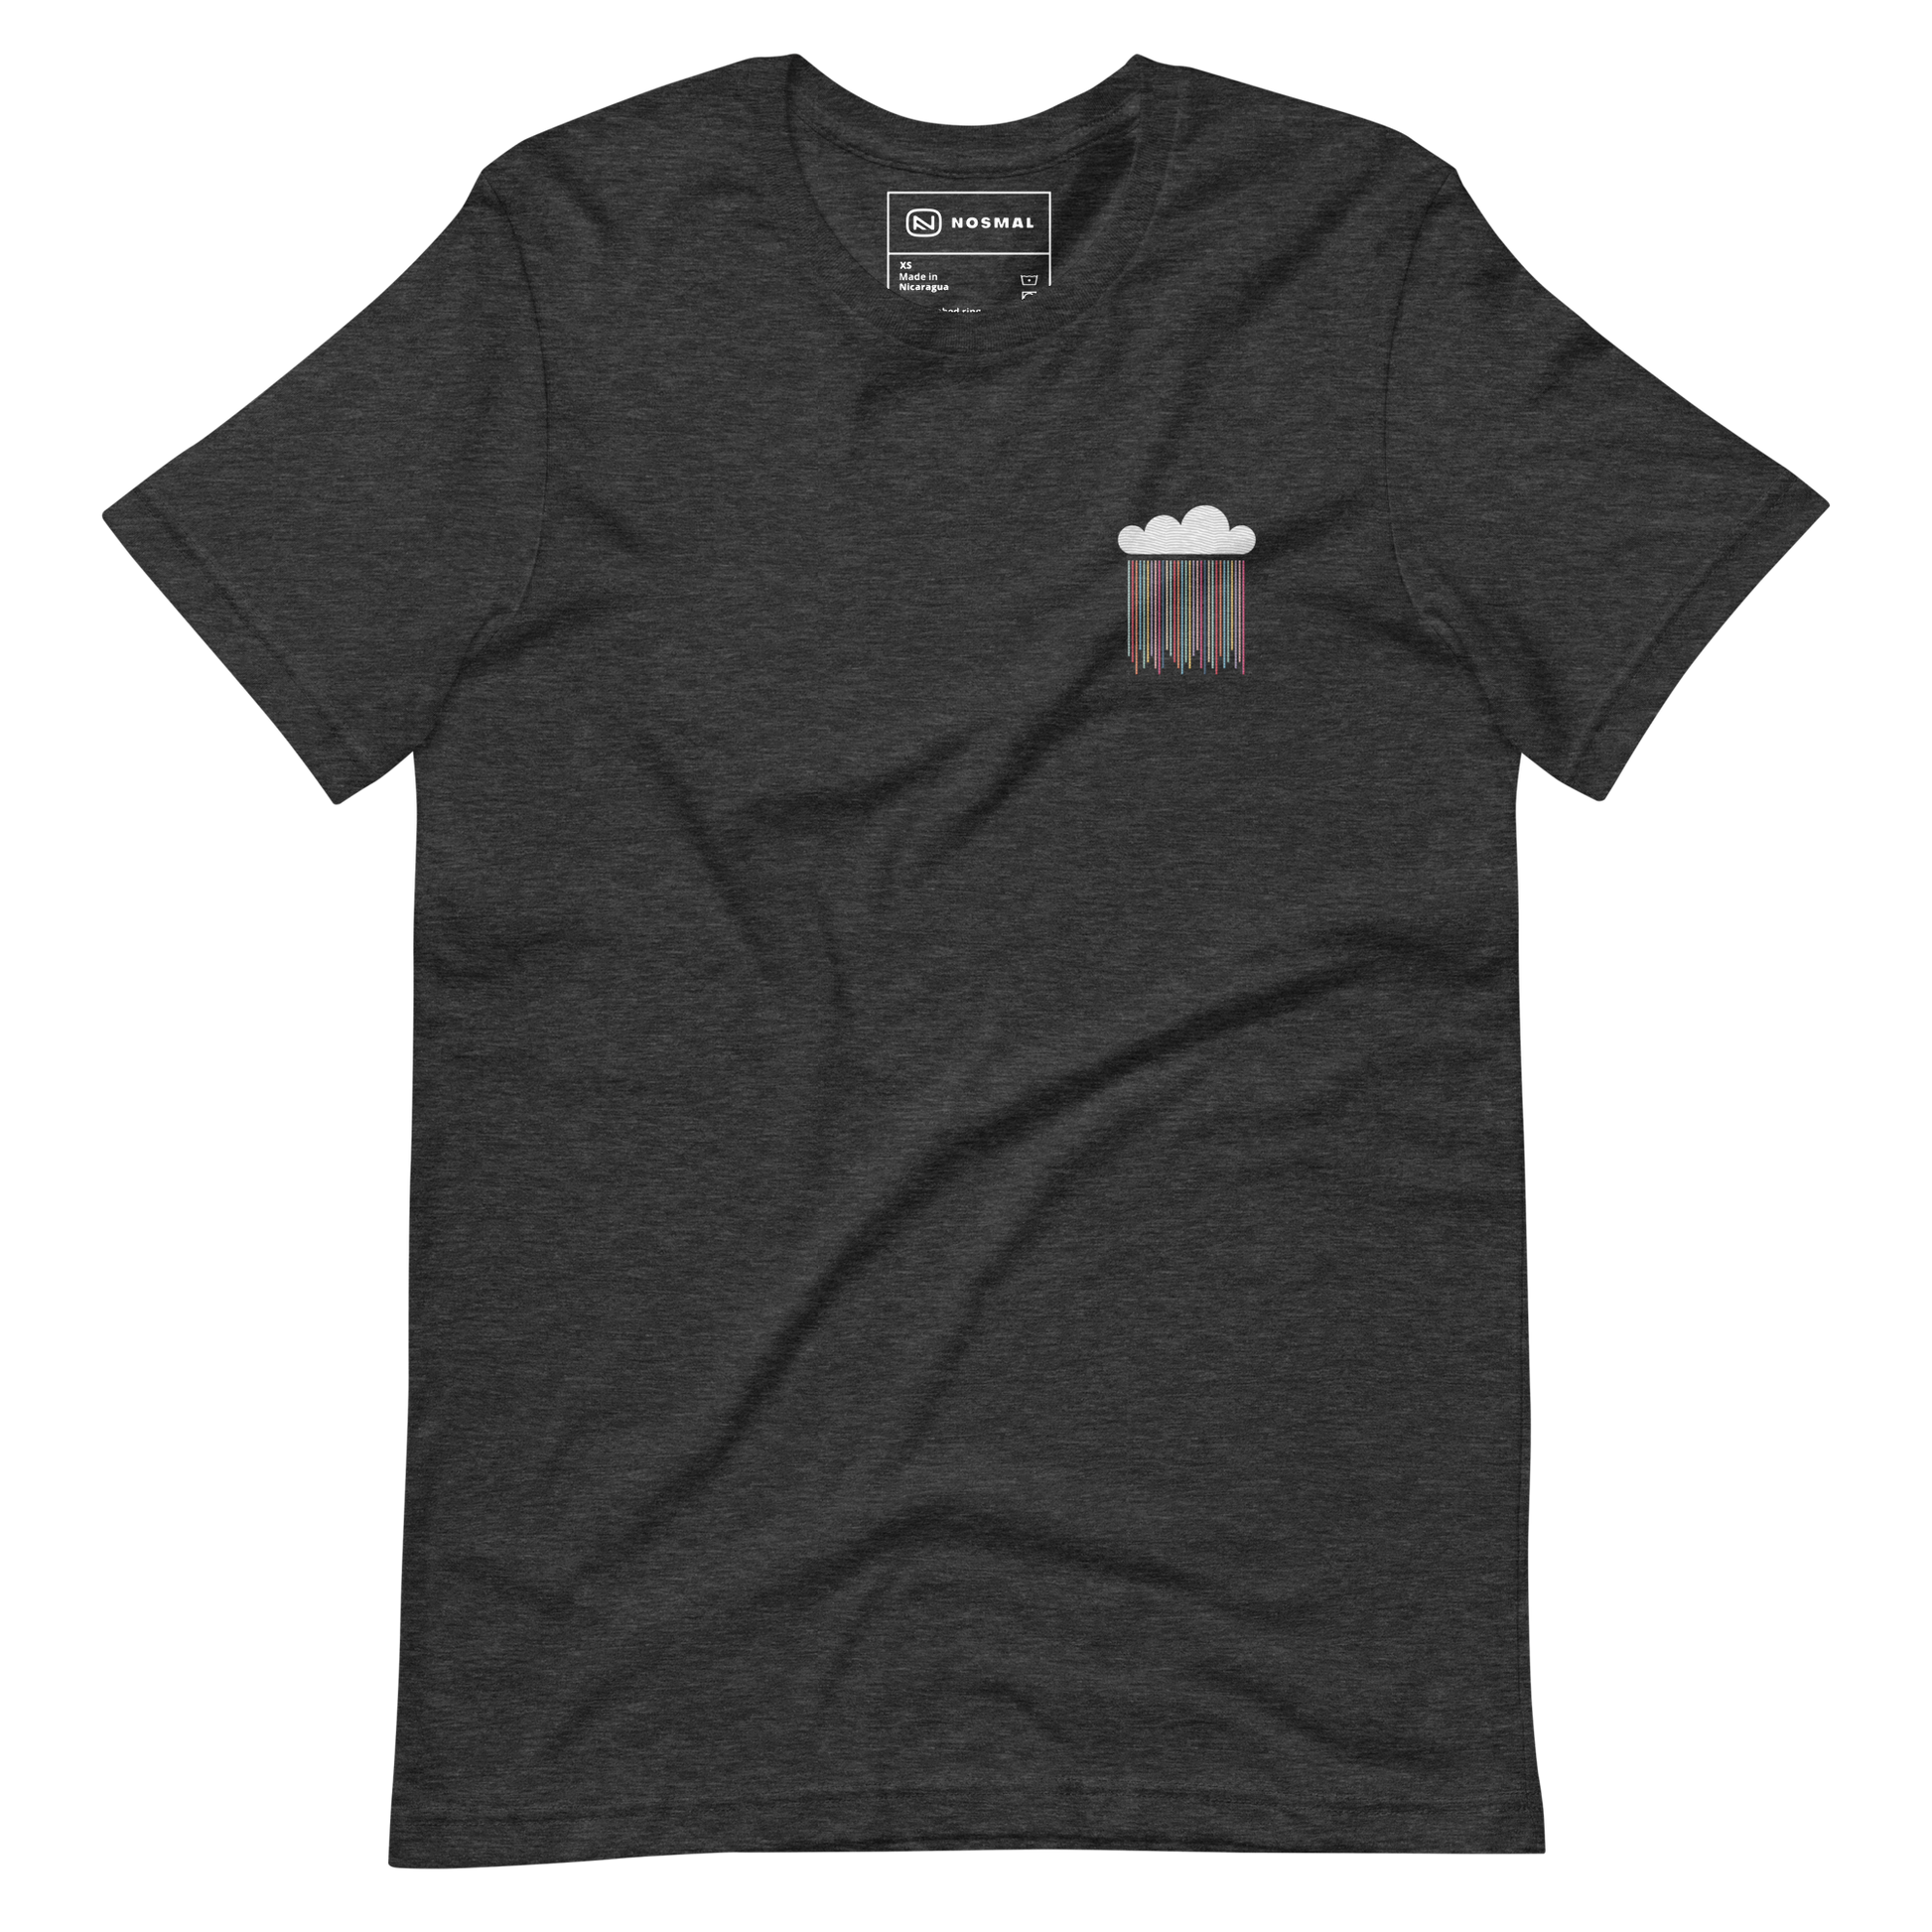 Straight on view of prism rain embroidered design on heather dark grey unisex t-shirt.